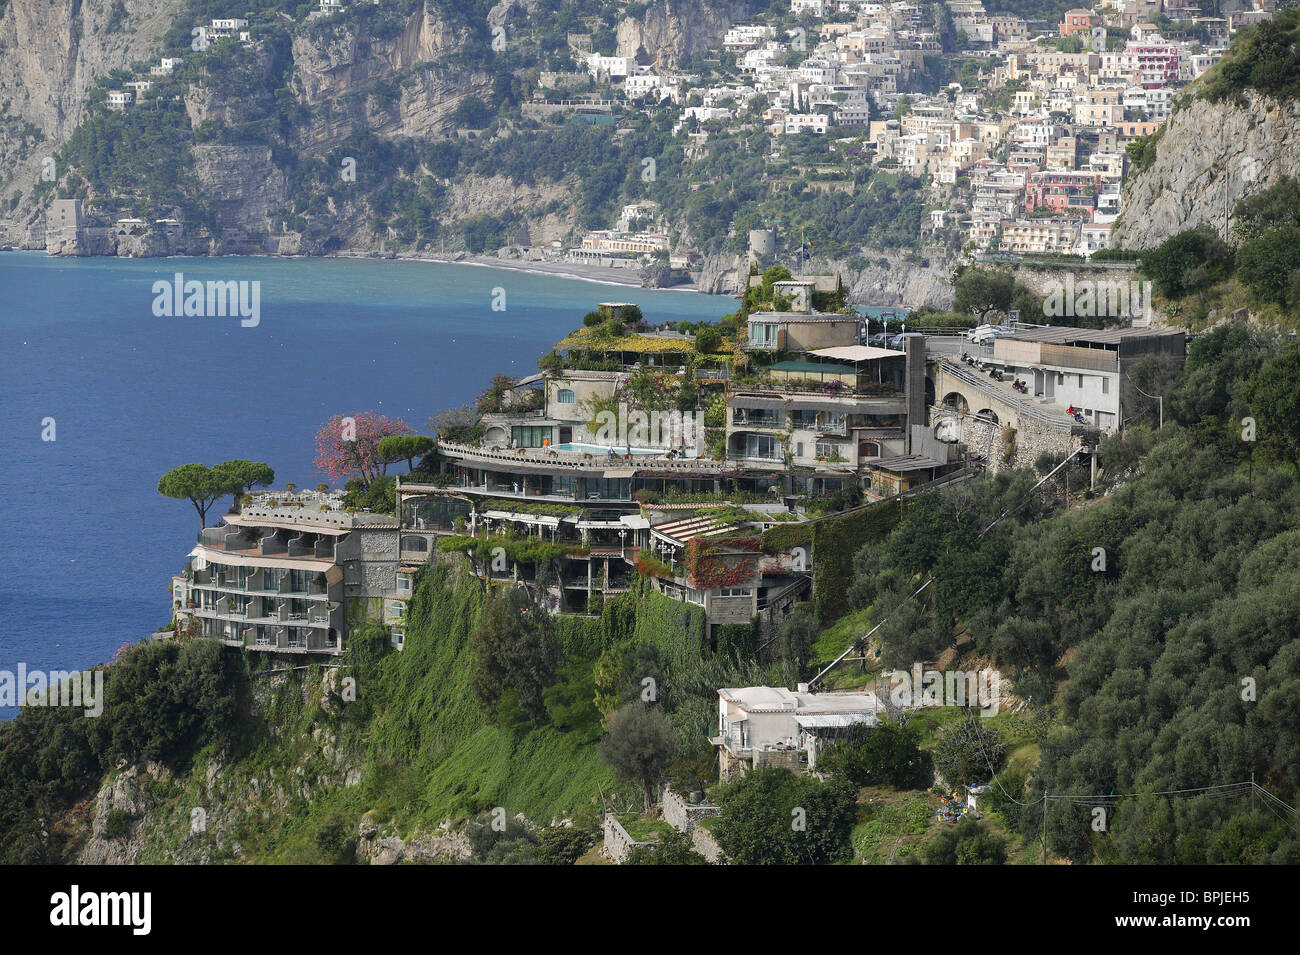 Hotel San Pietro, Positano, Amalfi Coast, Italy Stock Photo - Alamy